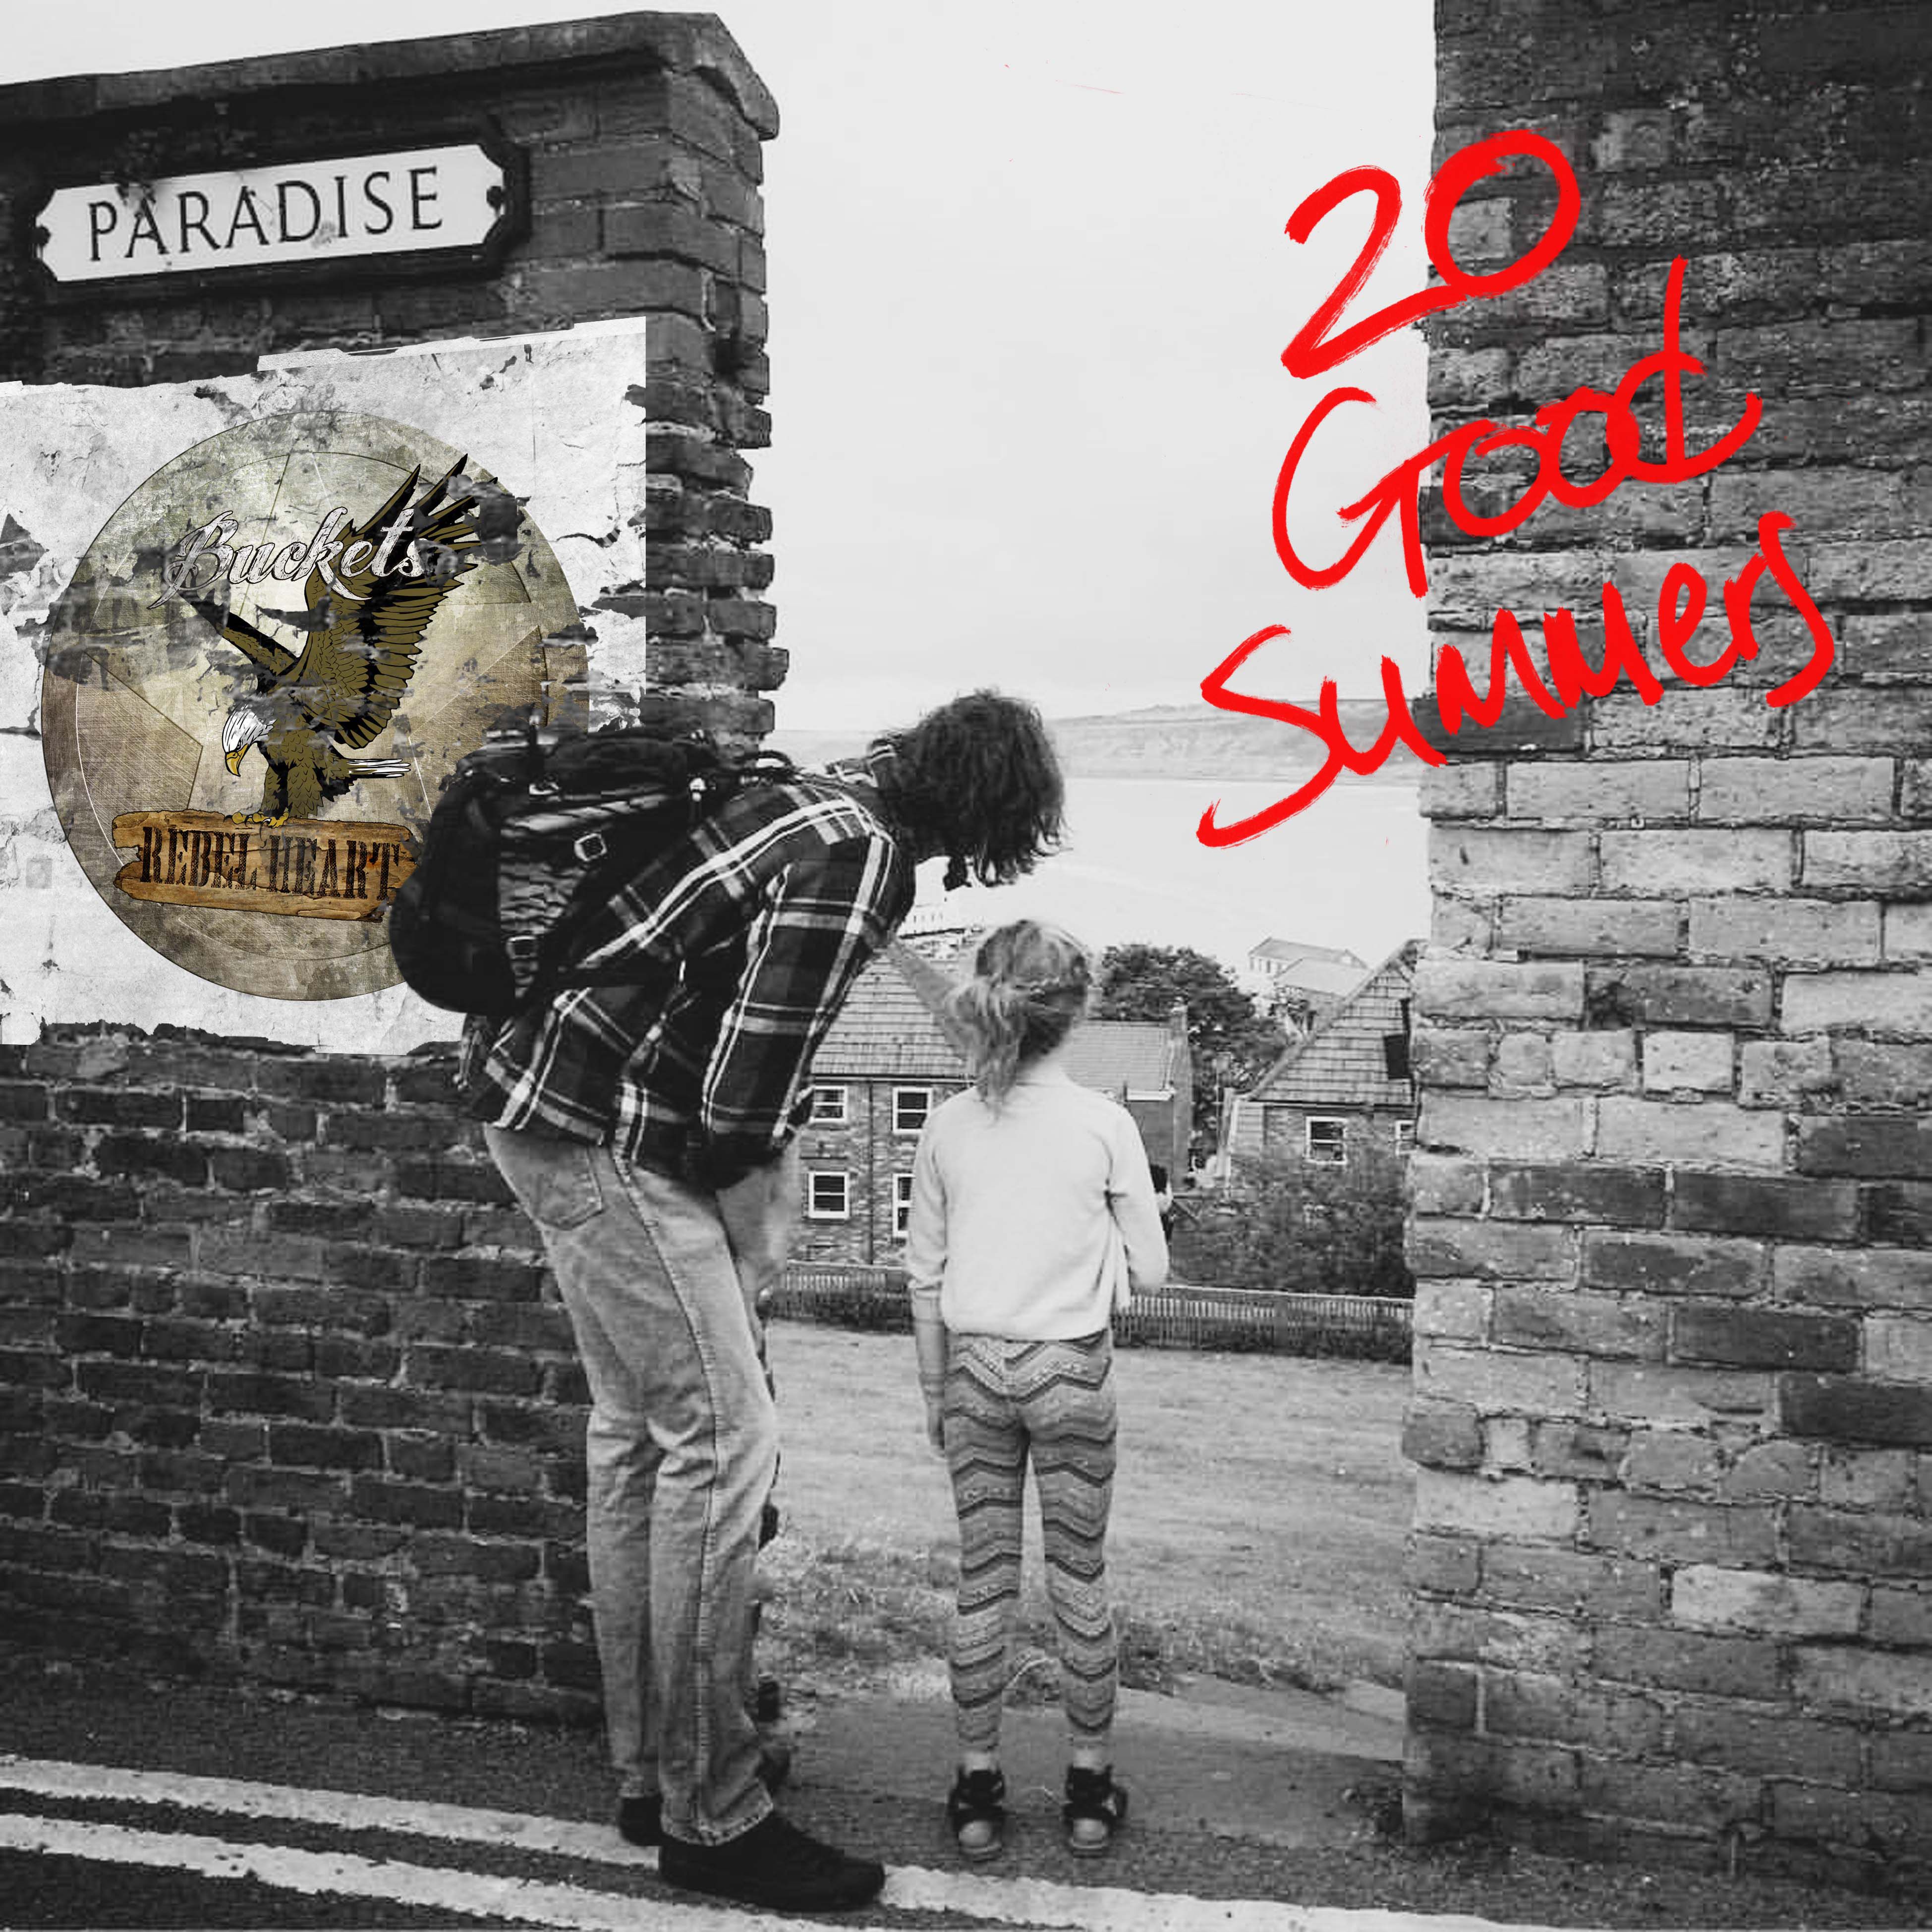 Buckets Rebel Heart - 20 Good Summers